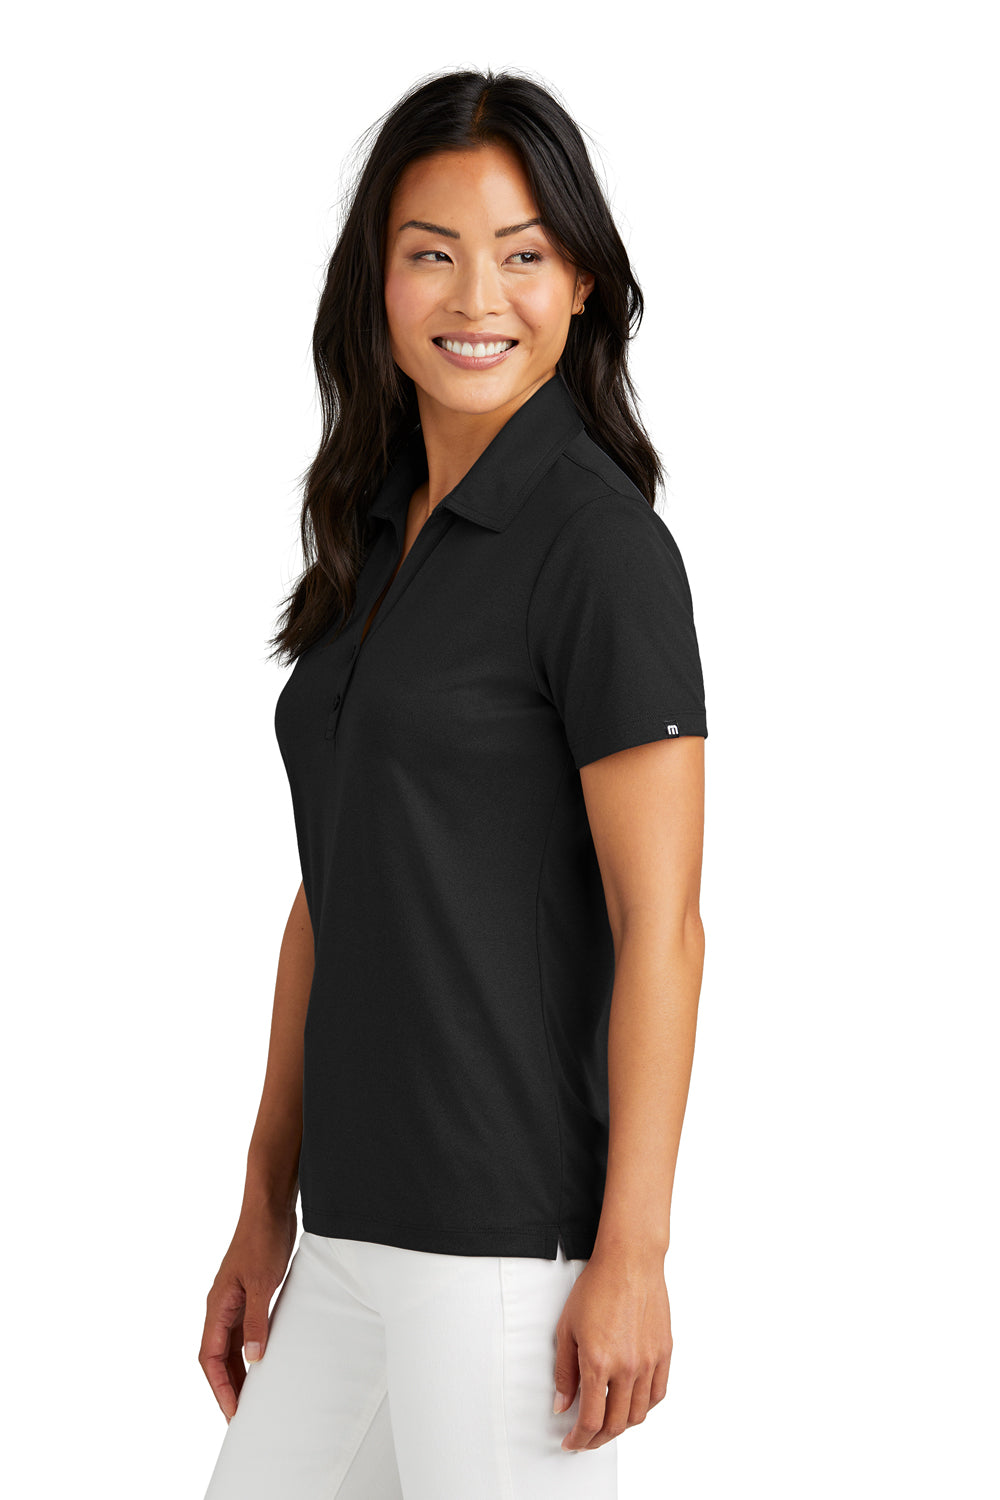 TravisMathew TM1WX002 Womens Coto Performance Wrinkle Resistant Short Sleeve Polo Shirt Black Model Side